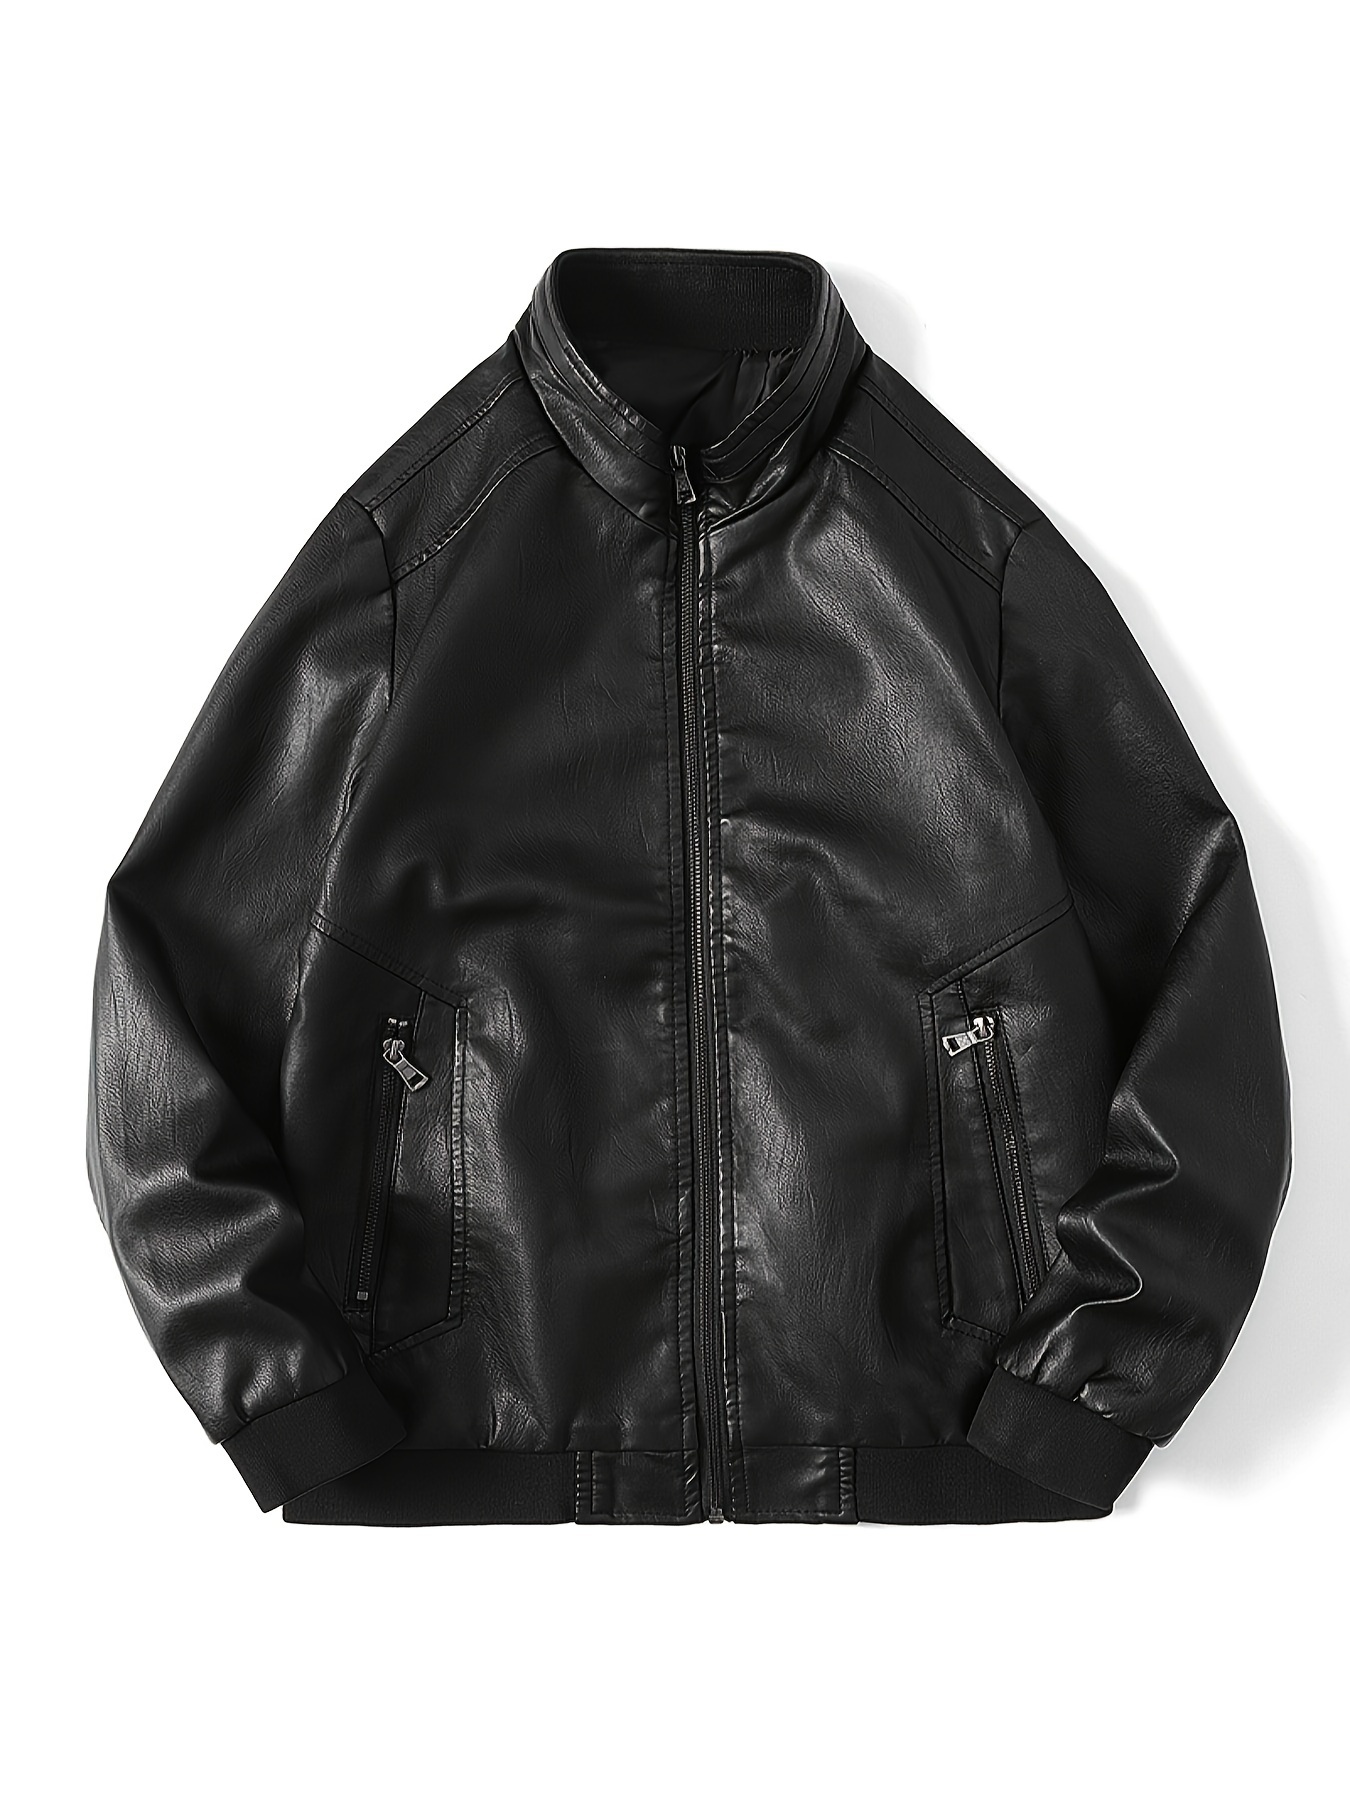 Chaqueta aviador  Jackets, Leather jacket, Fashion